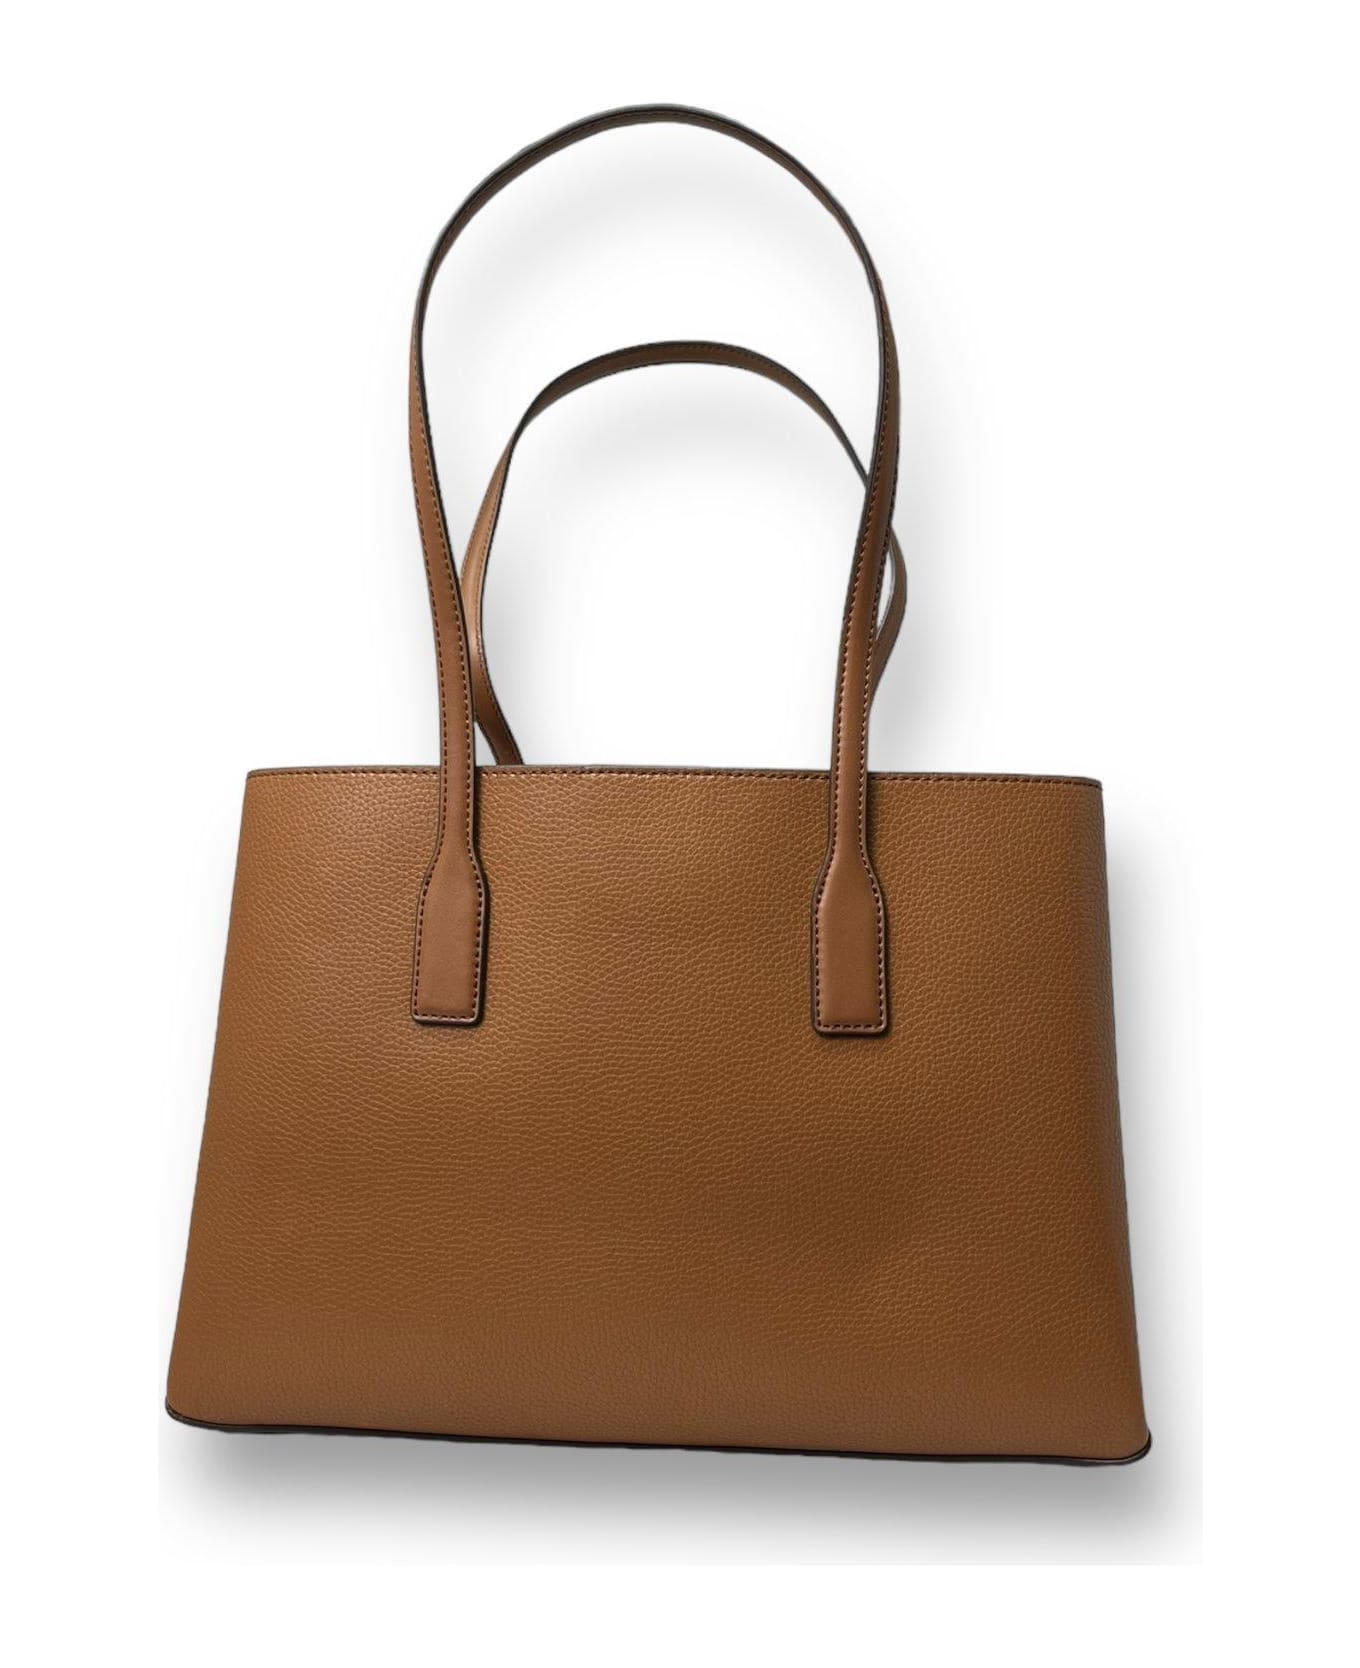 Michael Kors Collection Ruthie Medium Top Handle Bag - Luggage